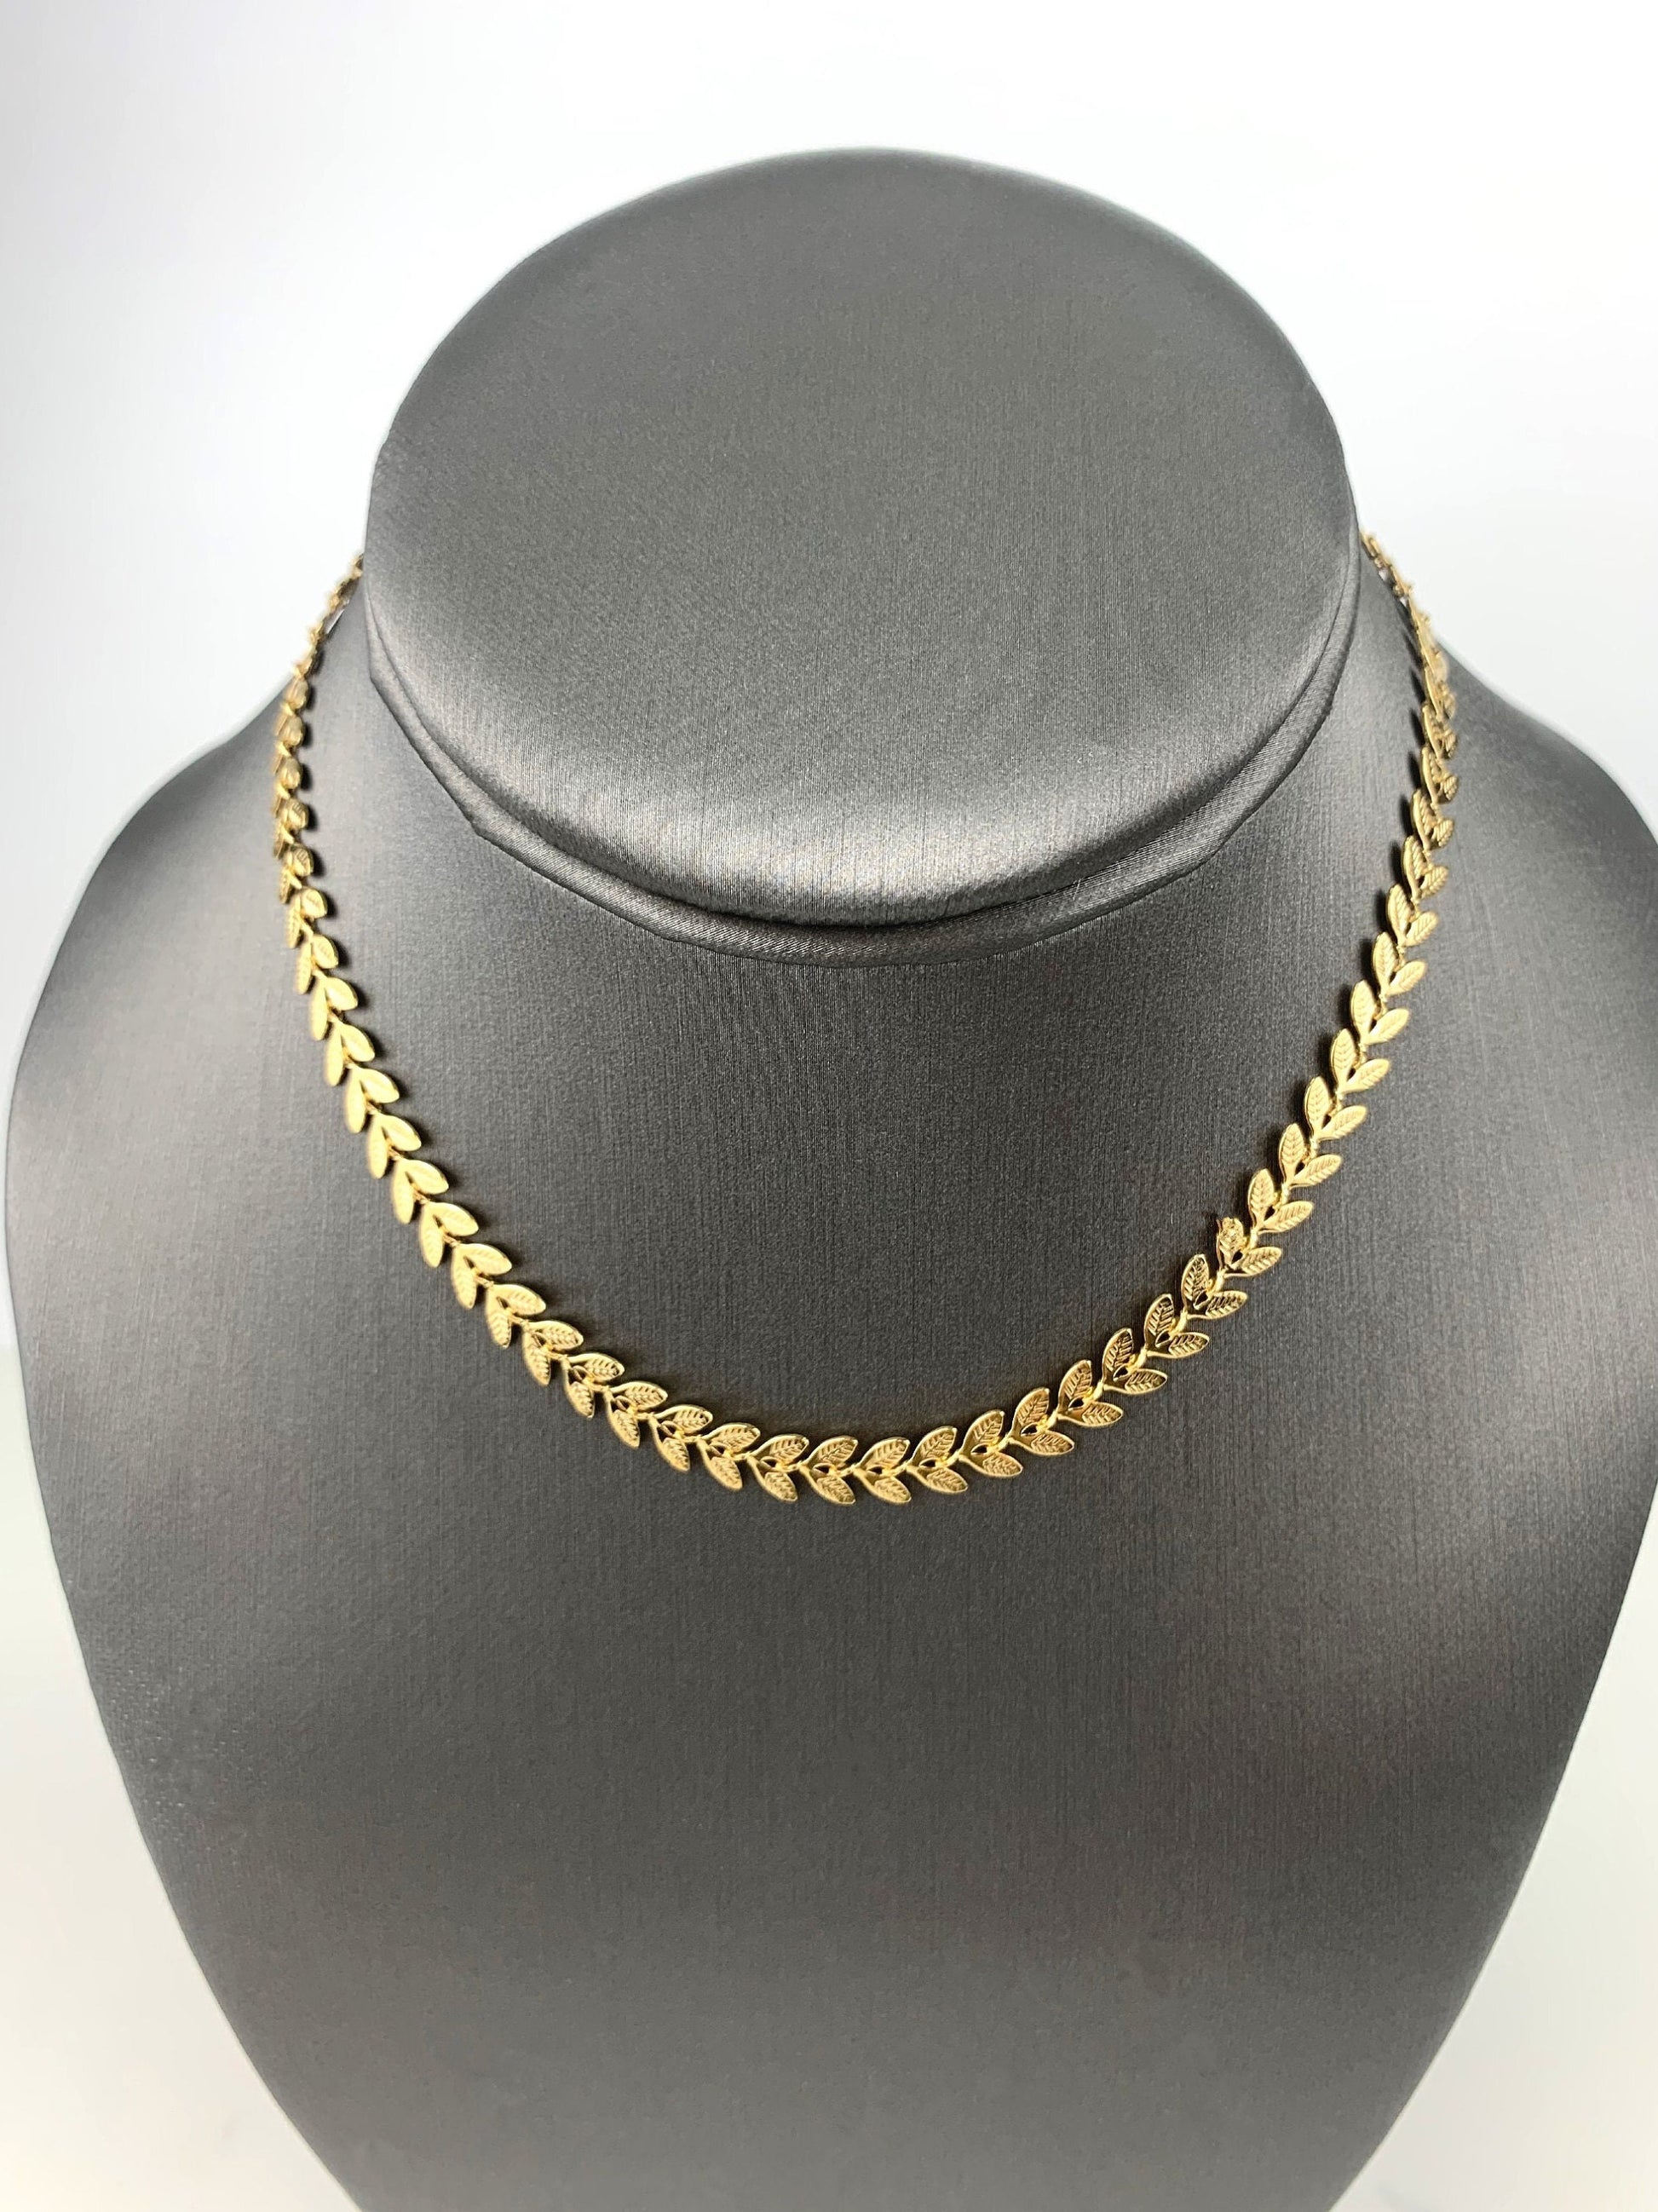 18k Gold Filled Fancy Chevron Link Chain Choker or Bracelet, Wholesale Jewelry Making Supplies